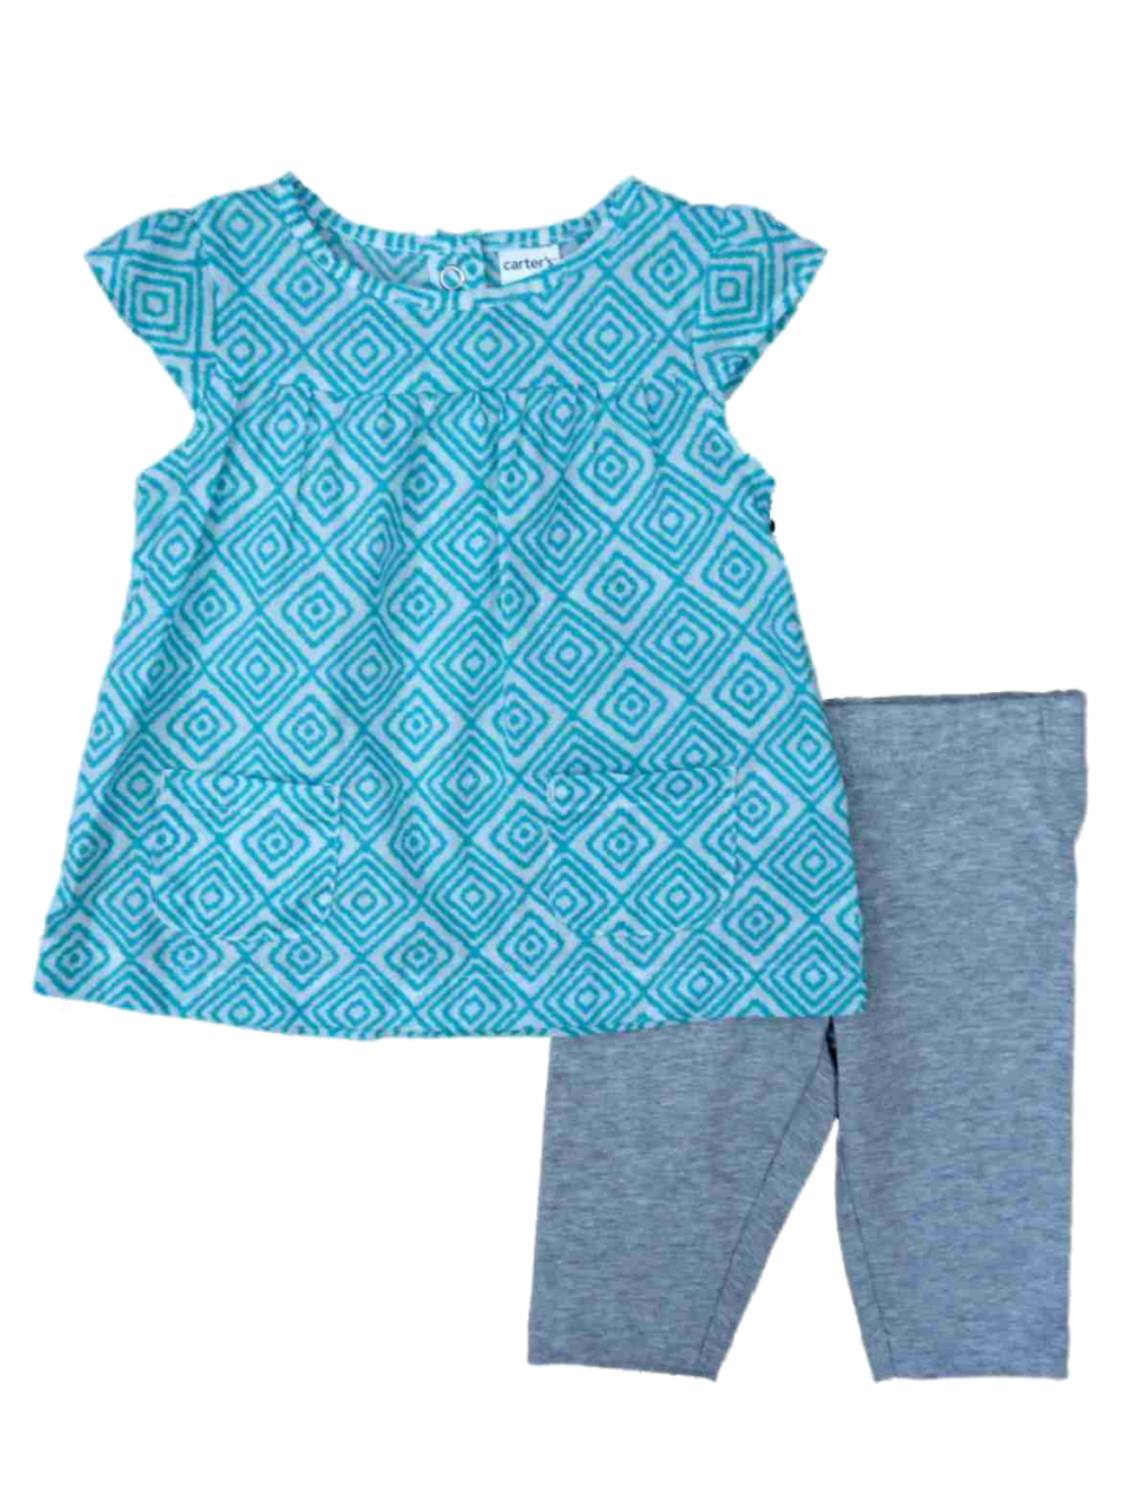 Carter's Carters Infant Girls Geometric Print Shirt & Gray Leggings 2 PC Set 6 Months